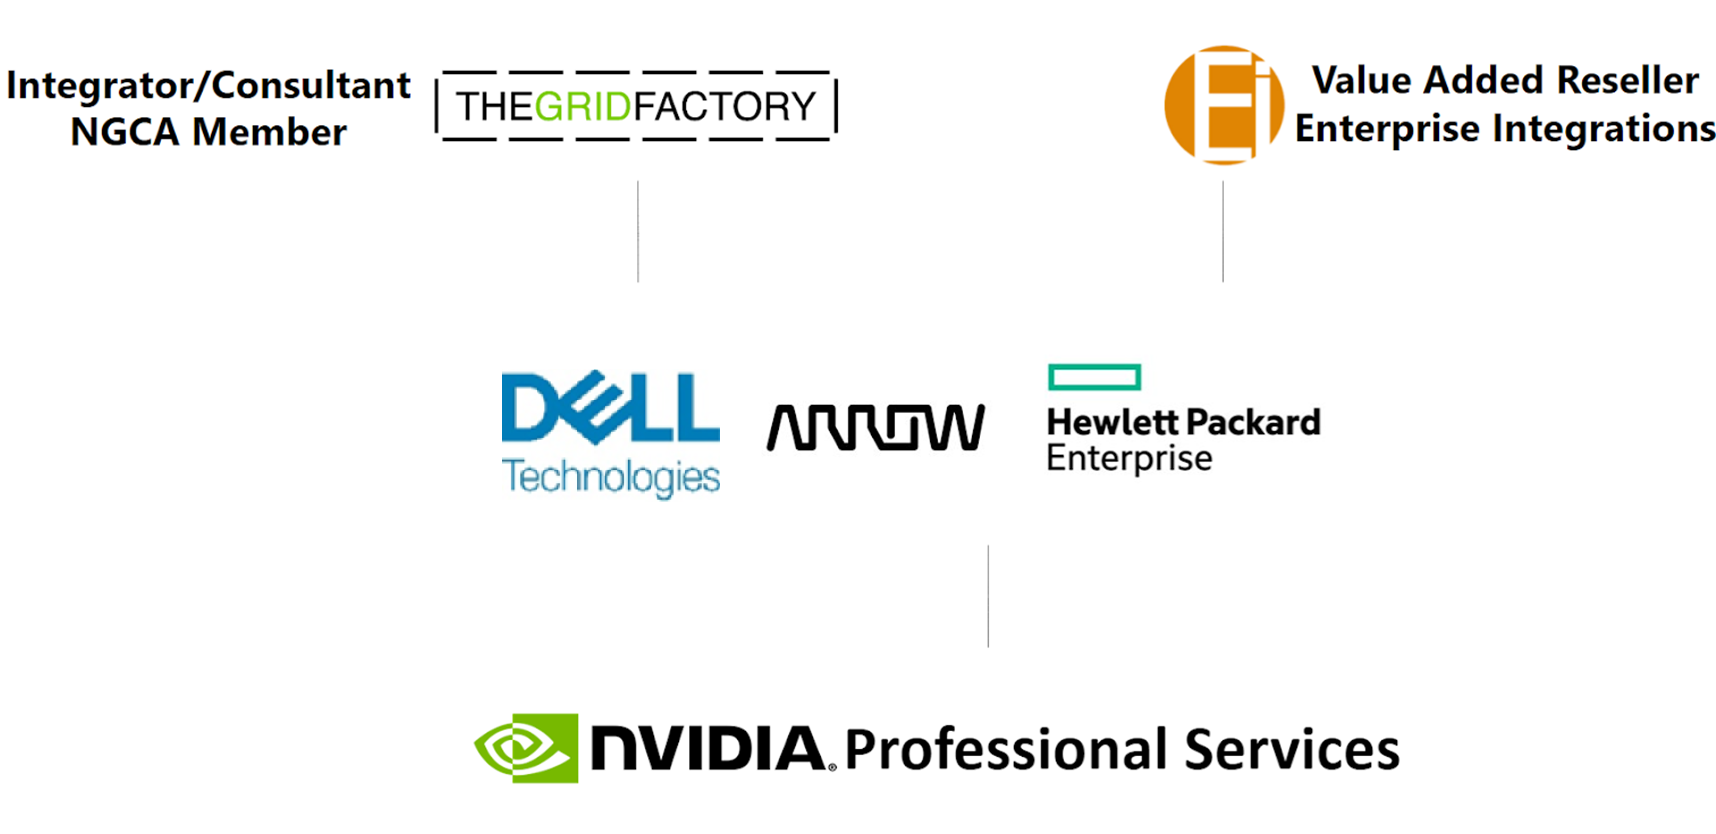 Sales distribution partner logos: The Grid Factory, Enterprise Integrations, Dell, Arrow, and Hewlett Packard Enterprise